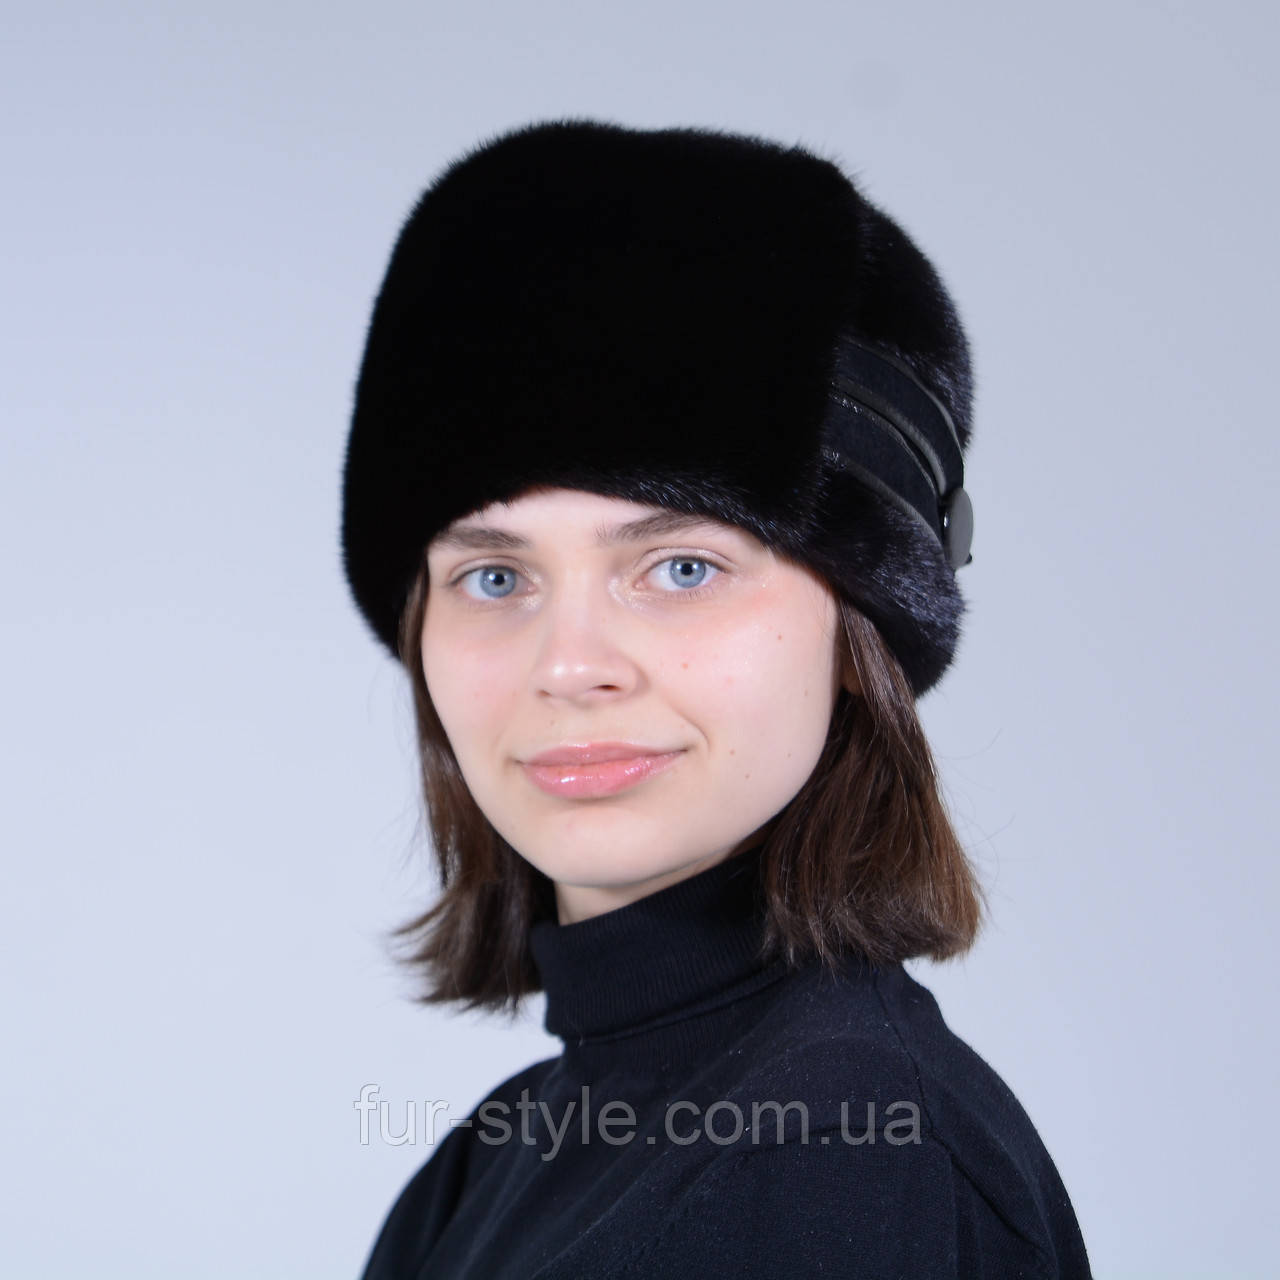 Жіноча норкова шапка з цільного натурального хутра "Козачка"